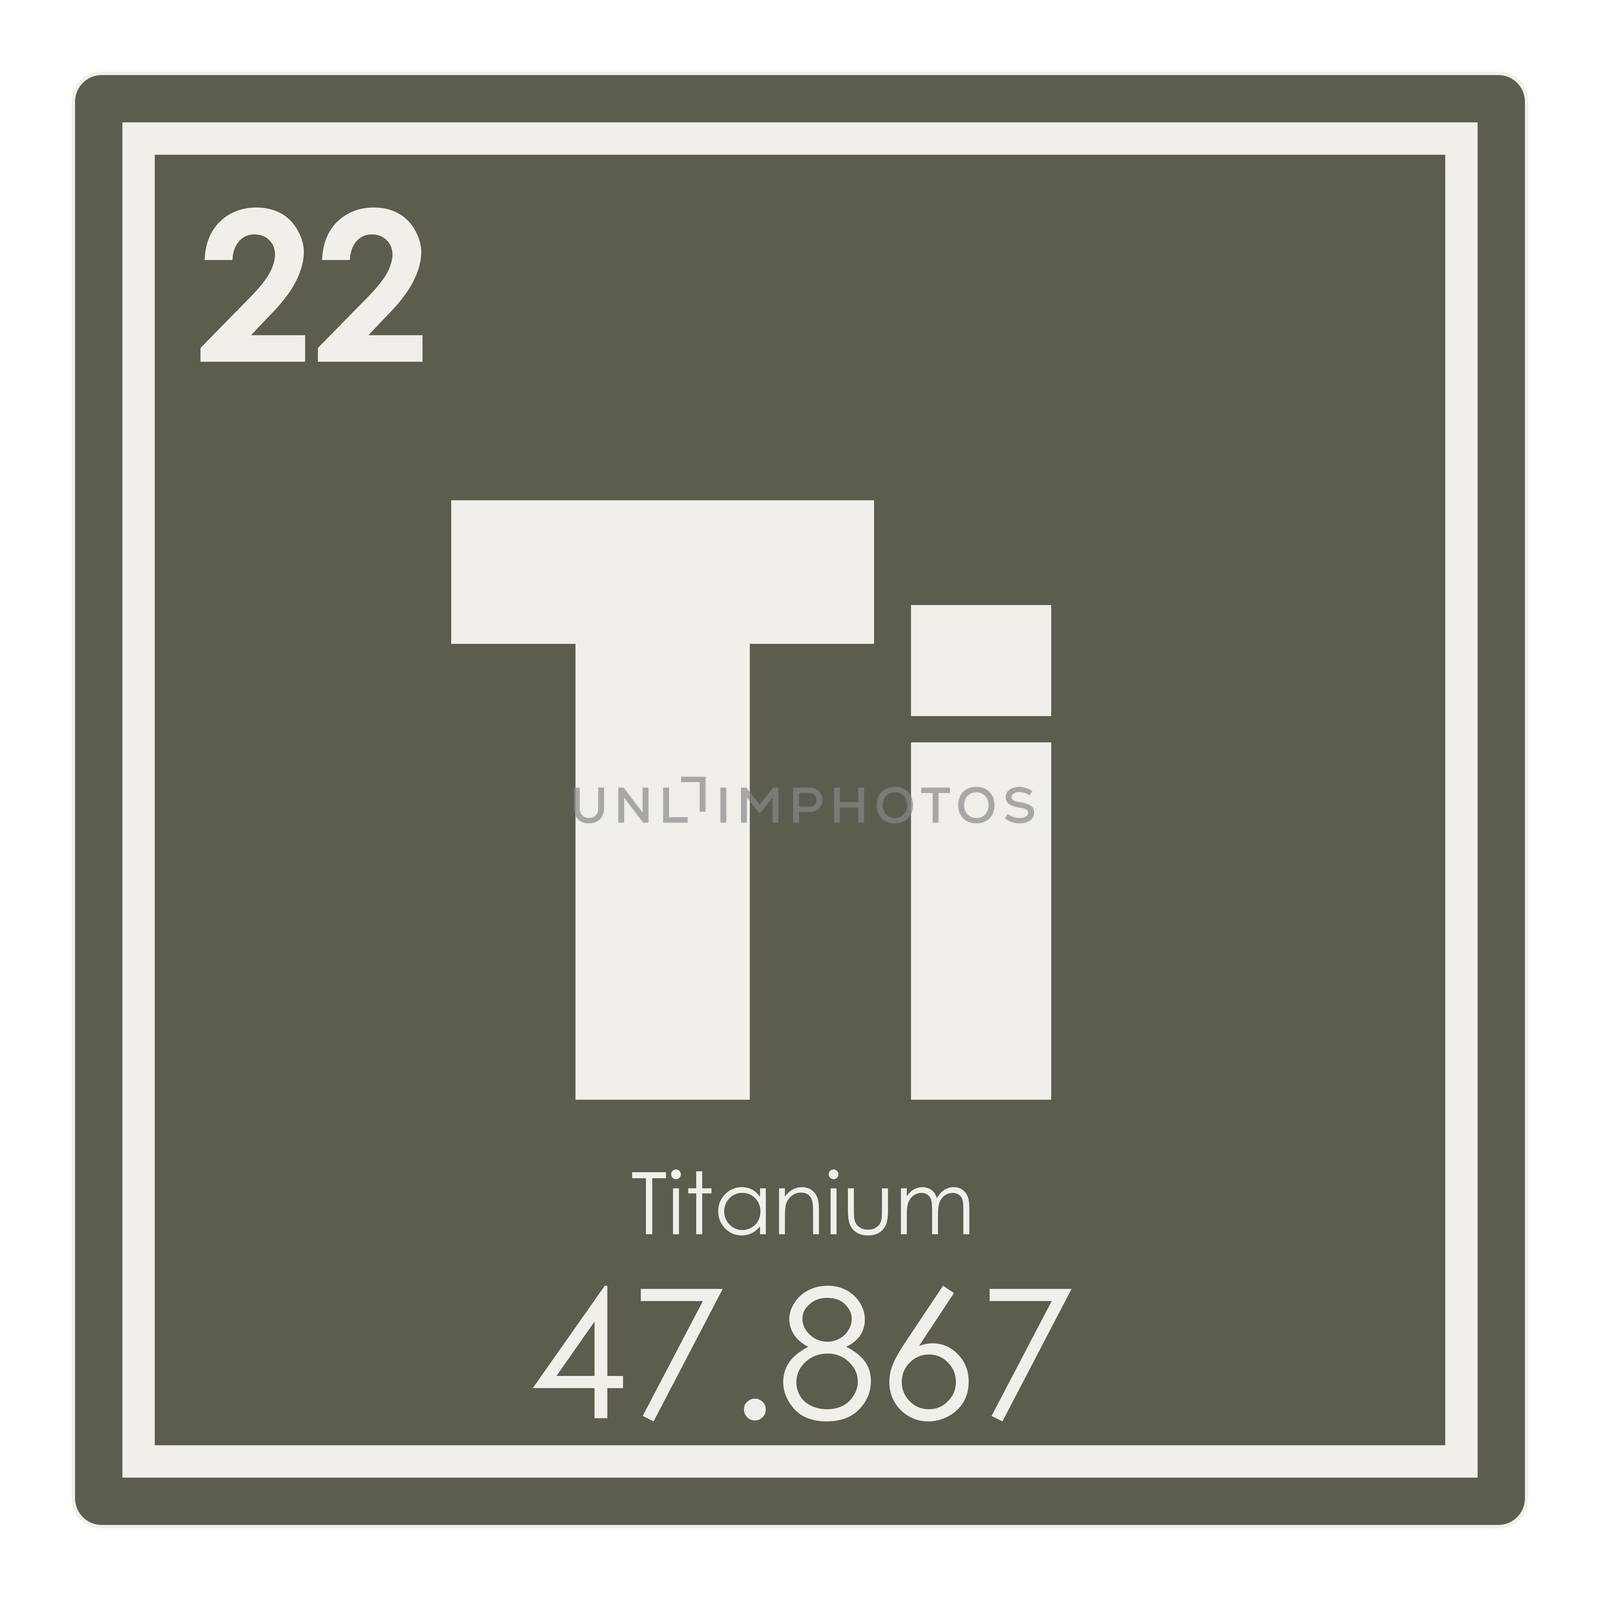 Titanium chemical element by tony4urban